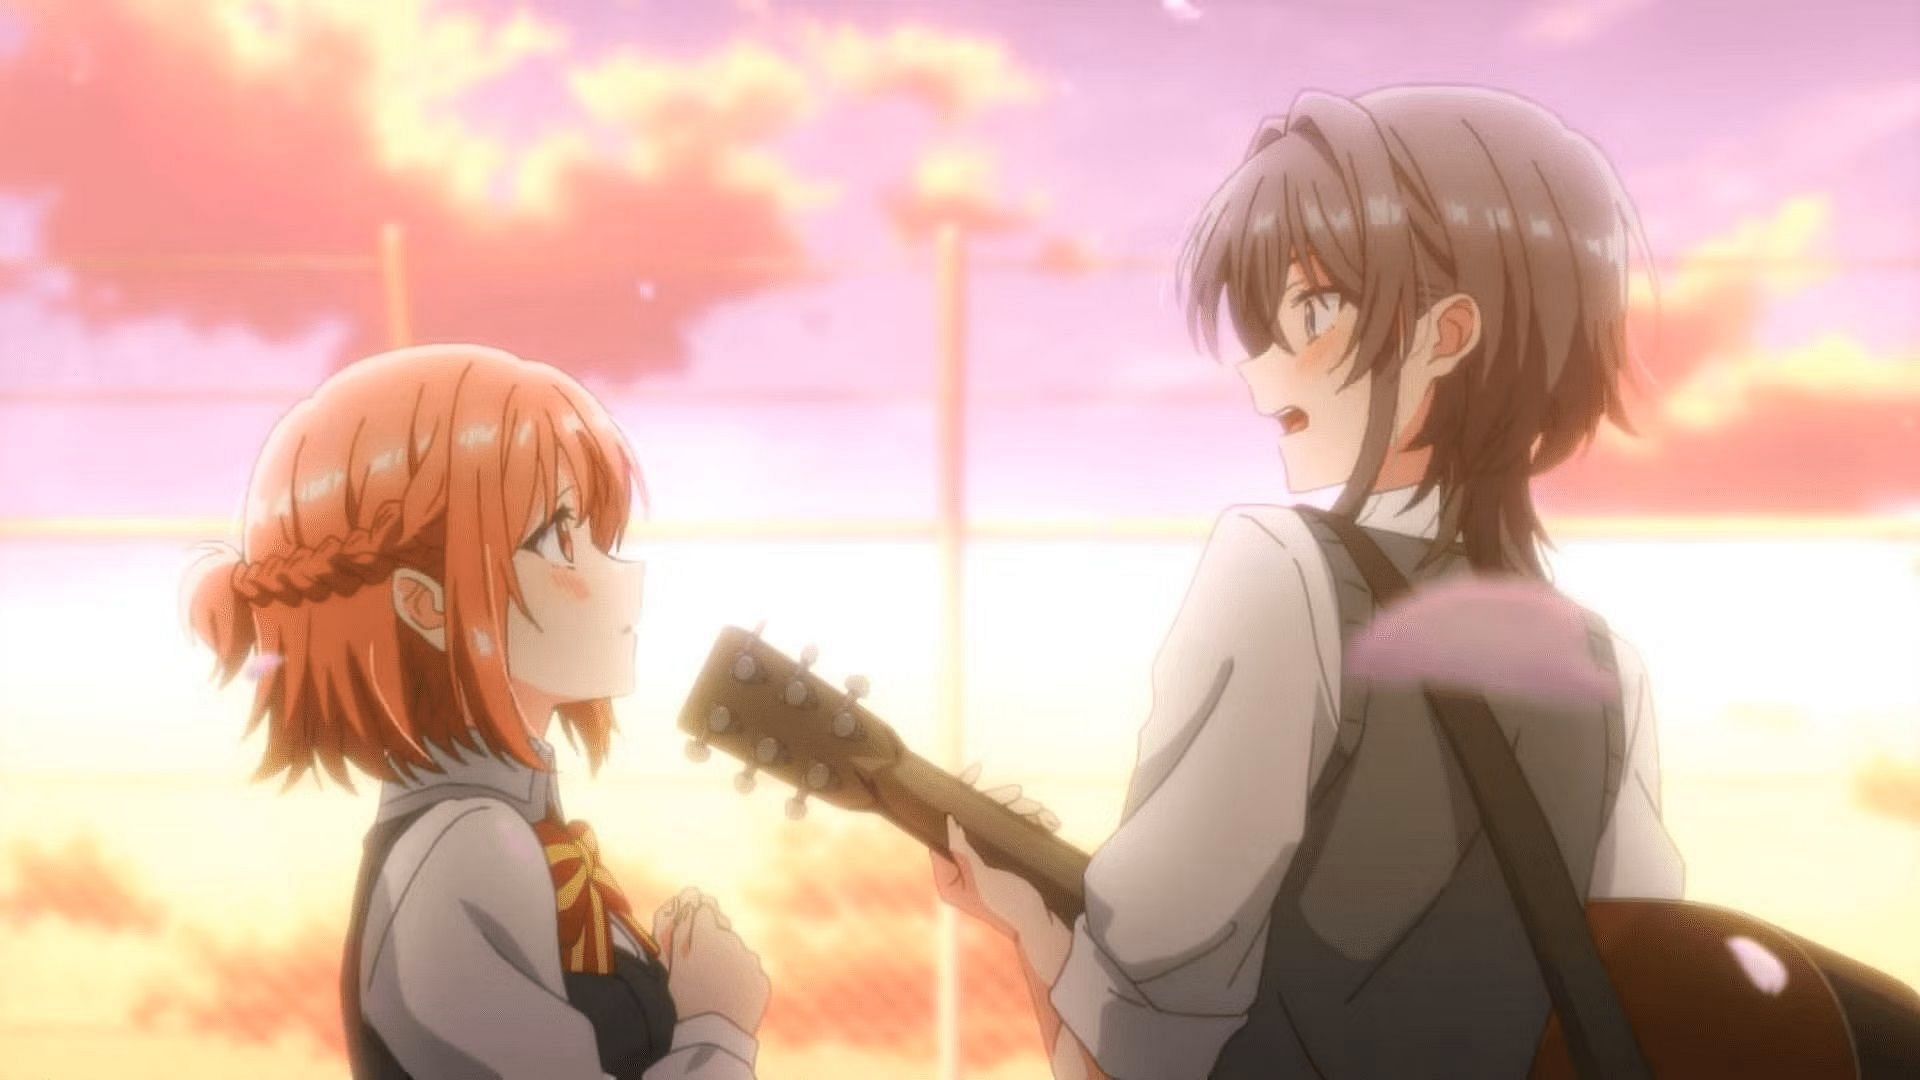 Himari and Yori, as seen in the anime (Image via Yokohama Animation Lab and Cloud Hearts)